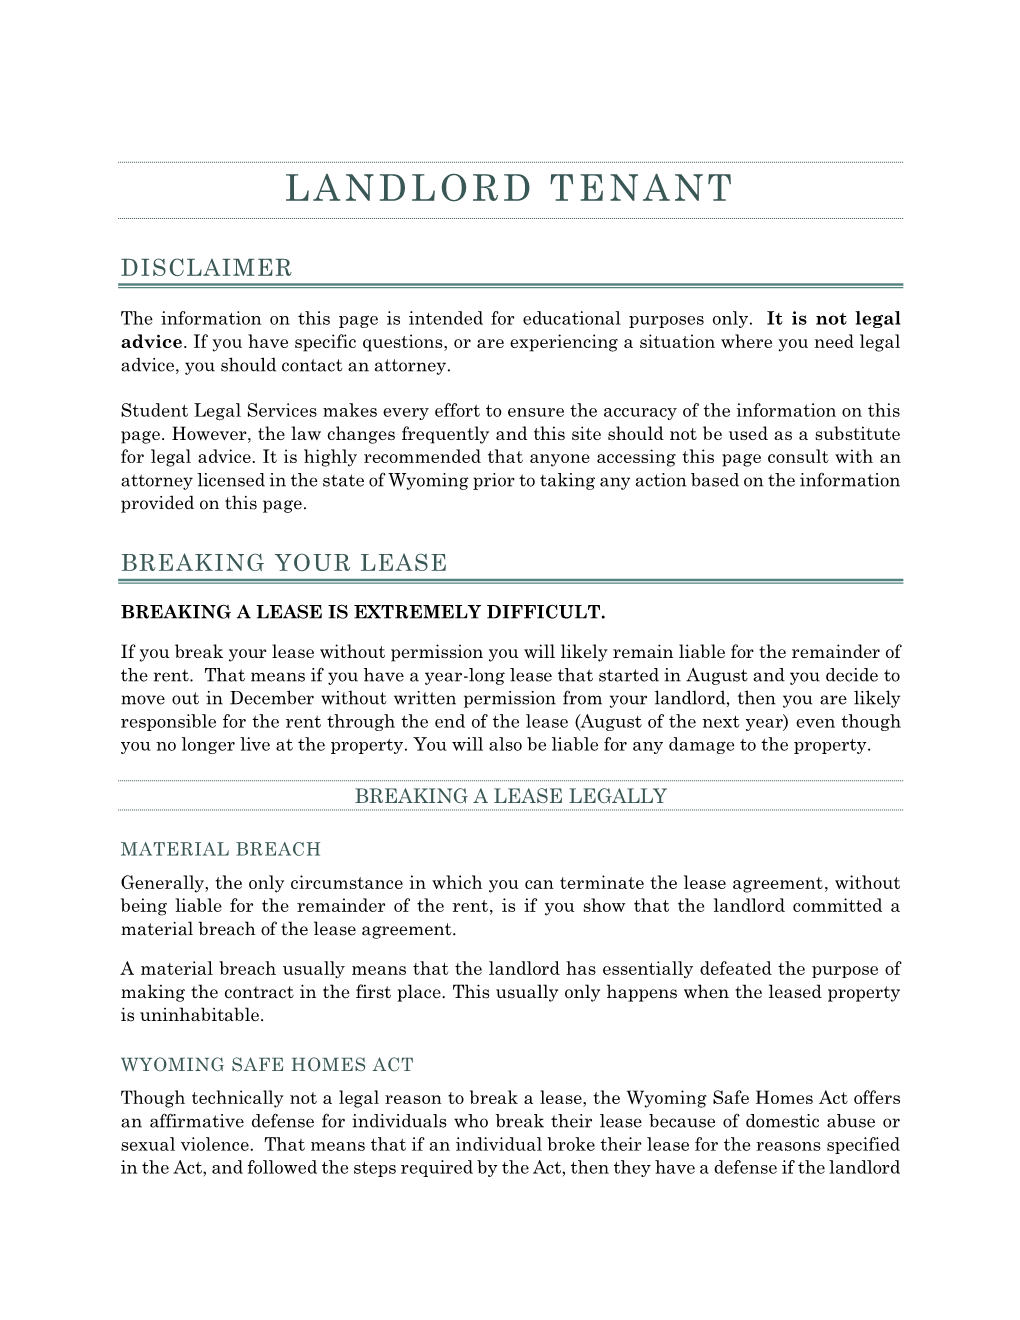 Landlord Tenant Information